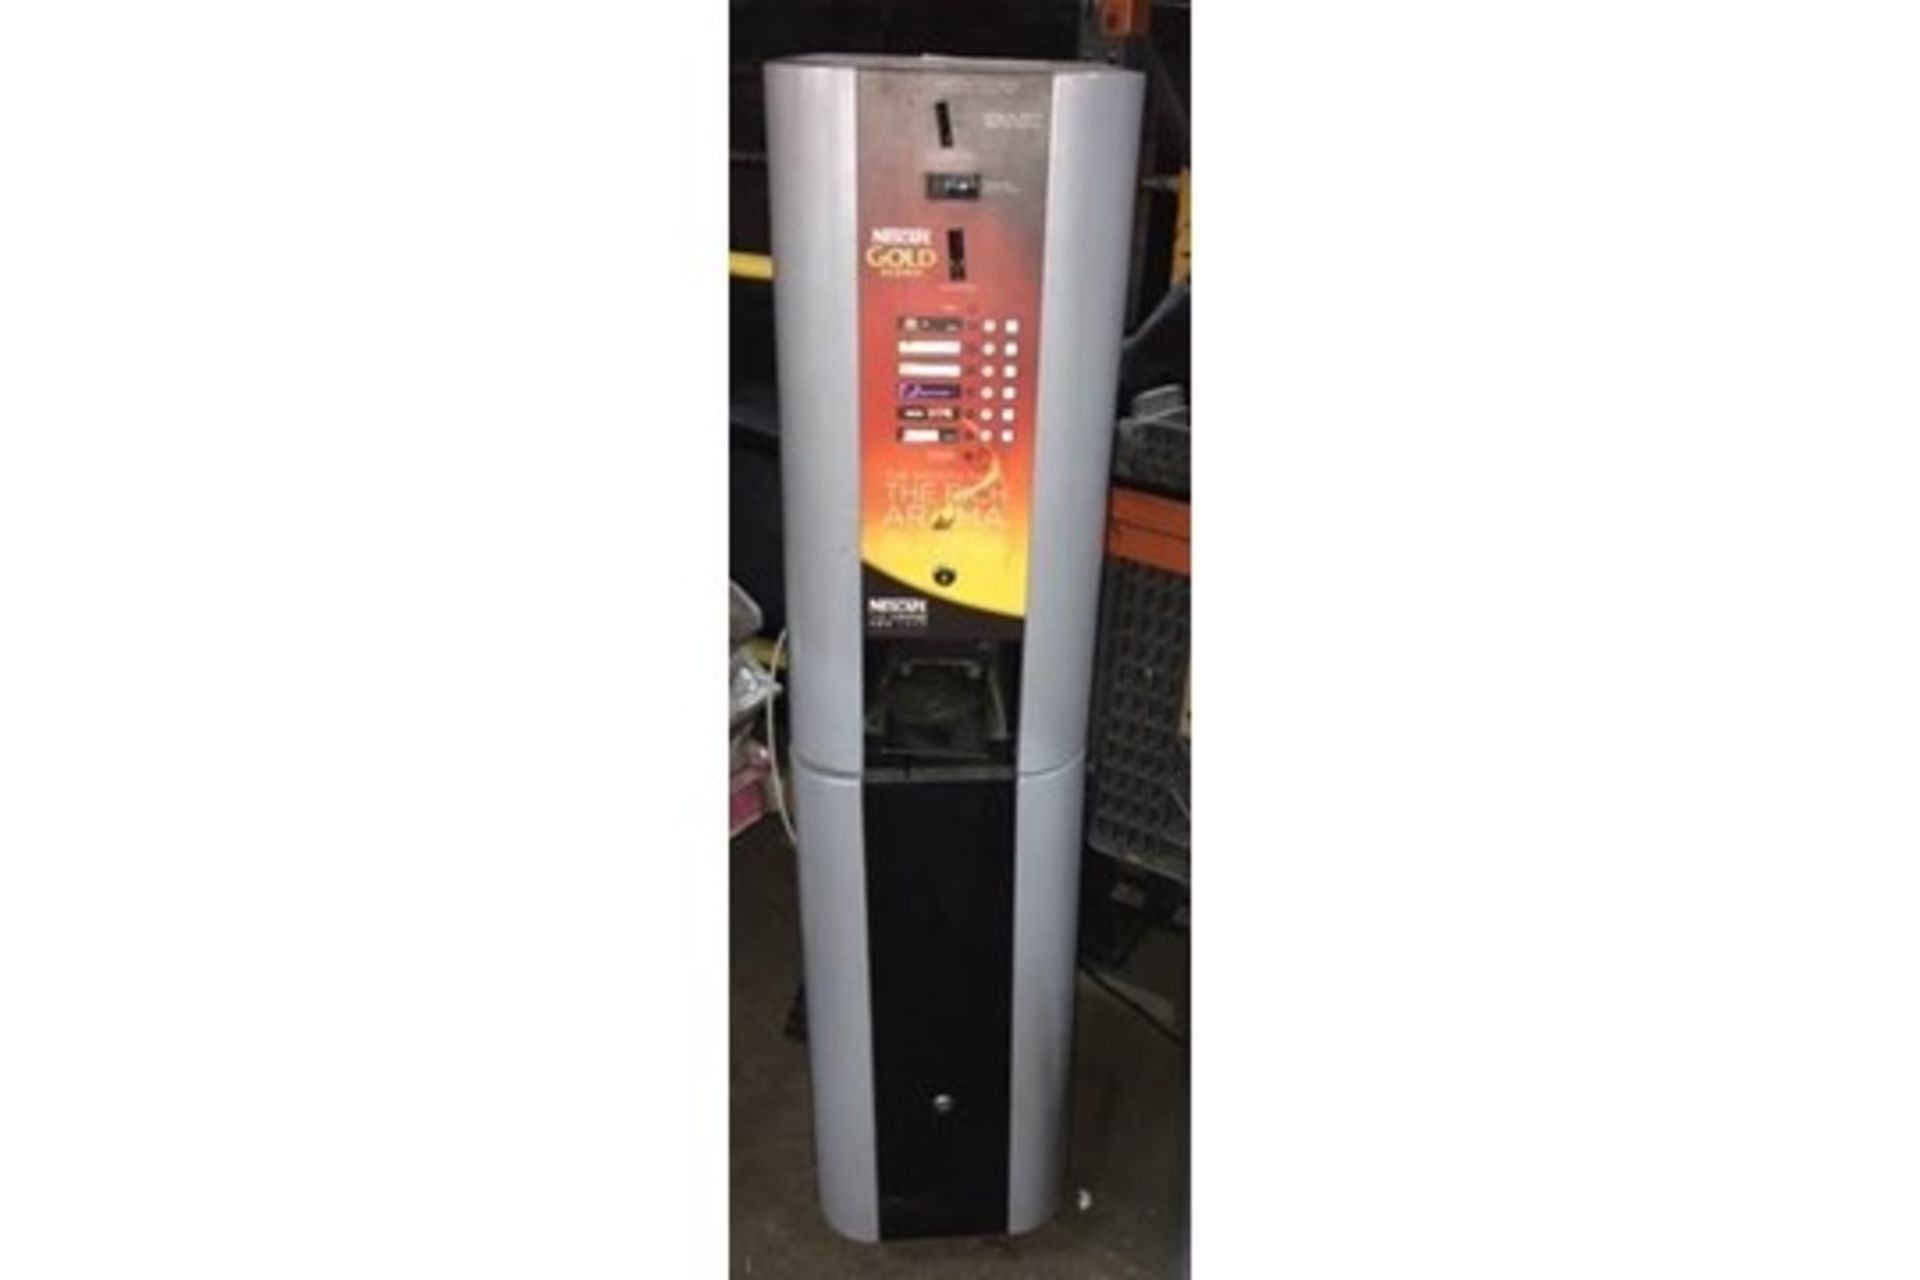 Nescafe Premier 200 Coffee Vending Machine - Image 2 of 5